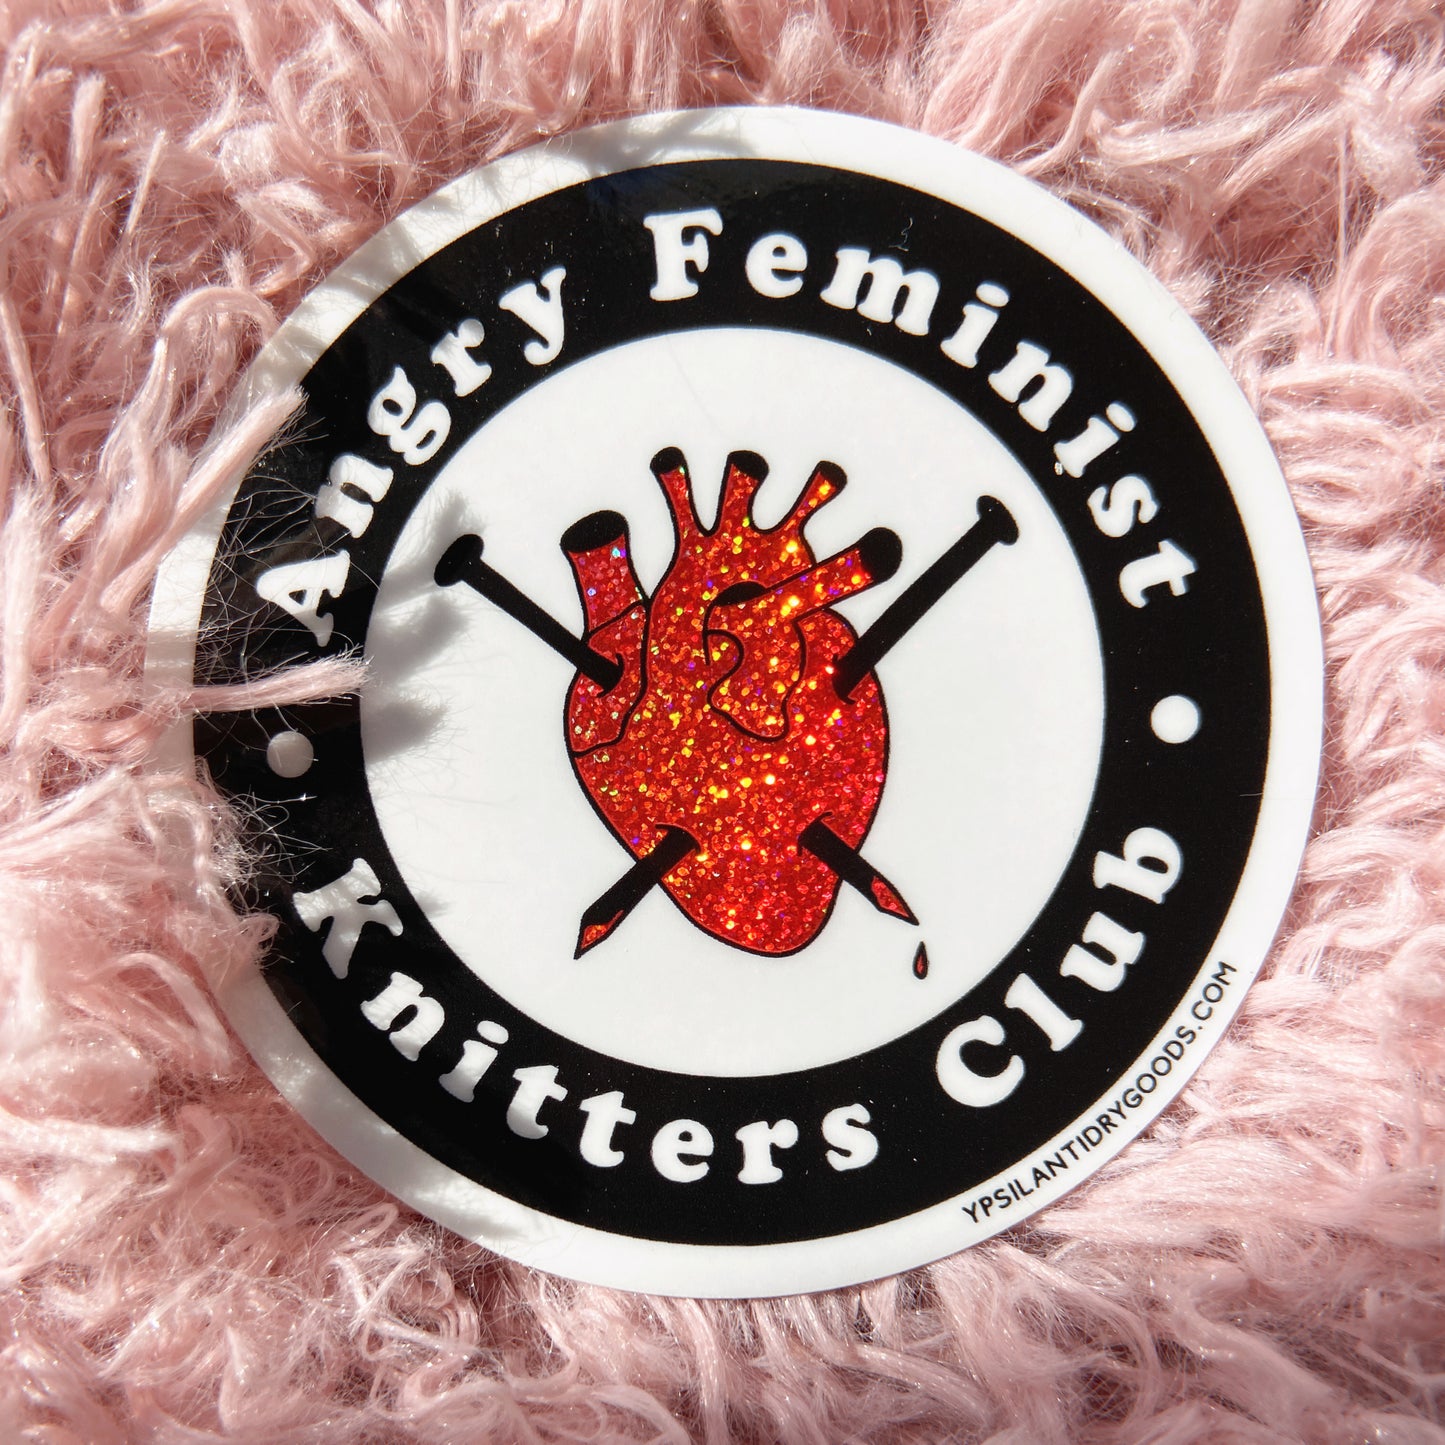 Angry Feminist Knitters Club Glitter Sticker